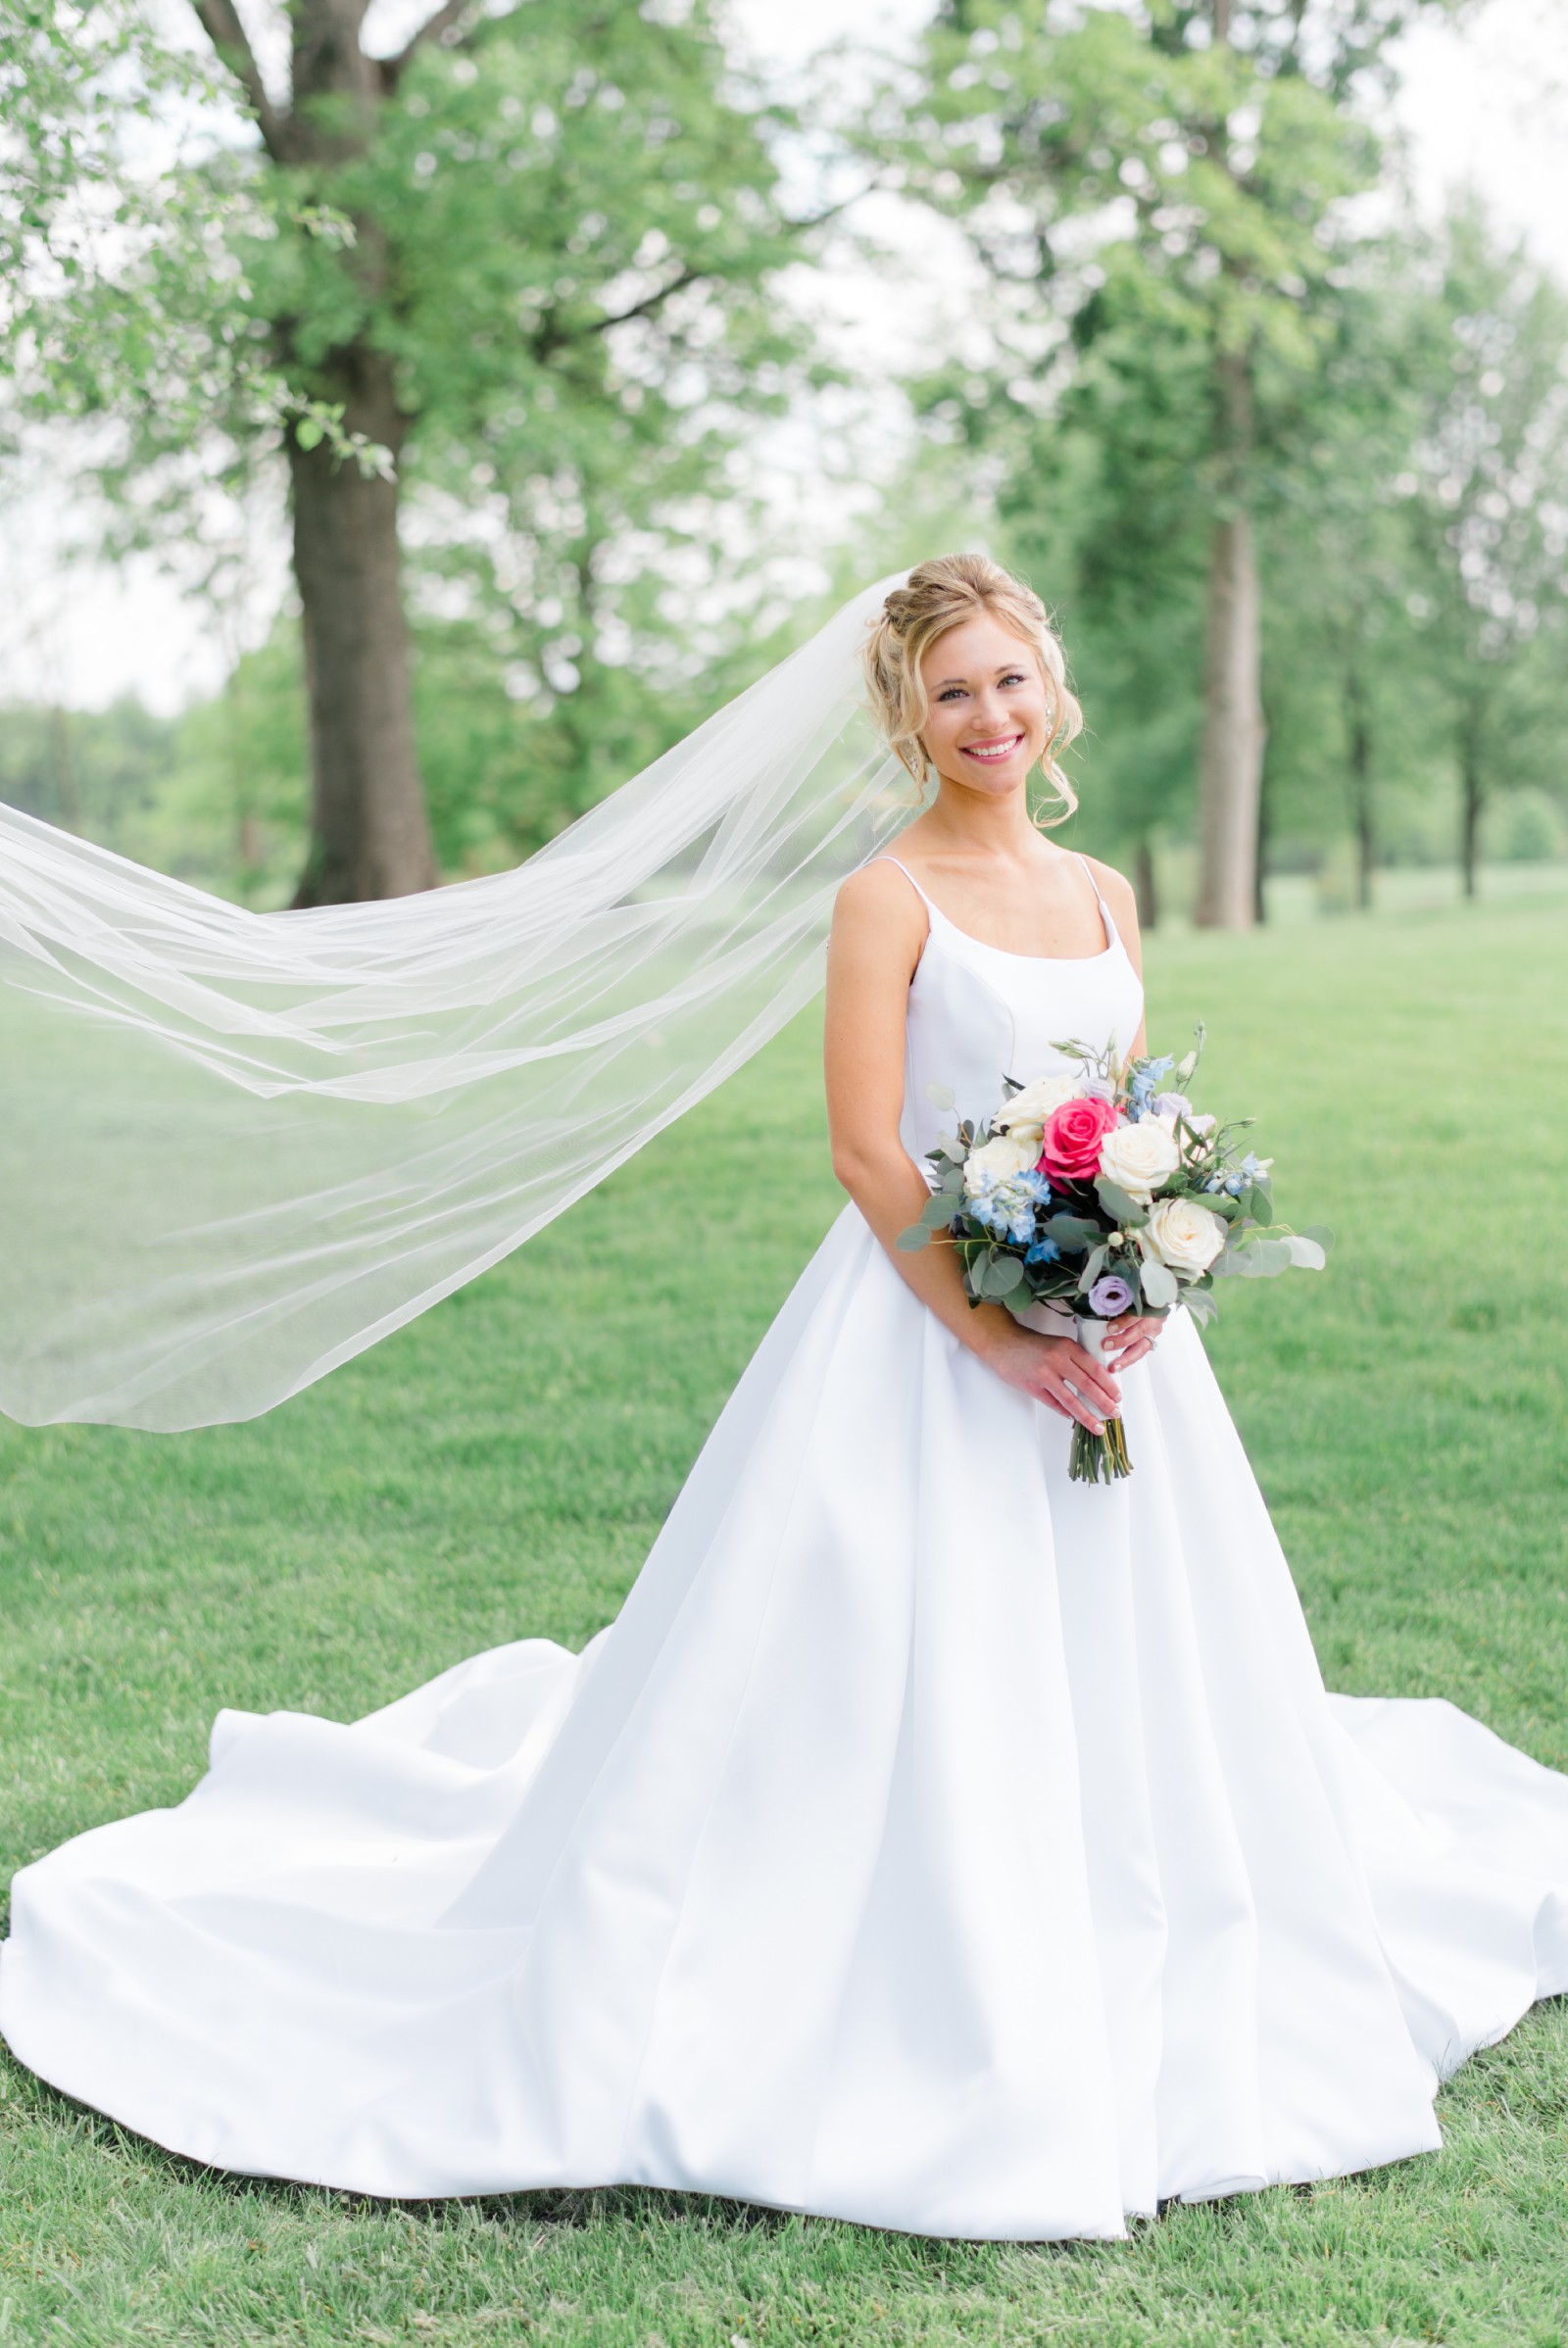 Off-Rack Sample Gowns — Bridal Rack